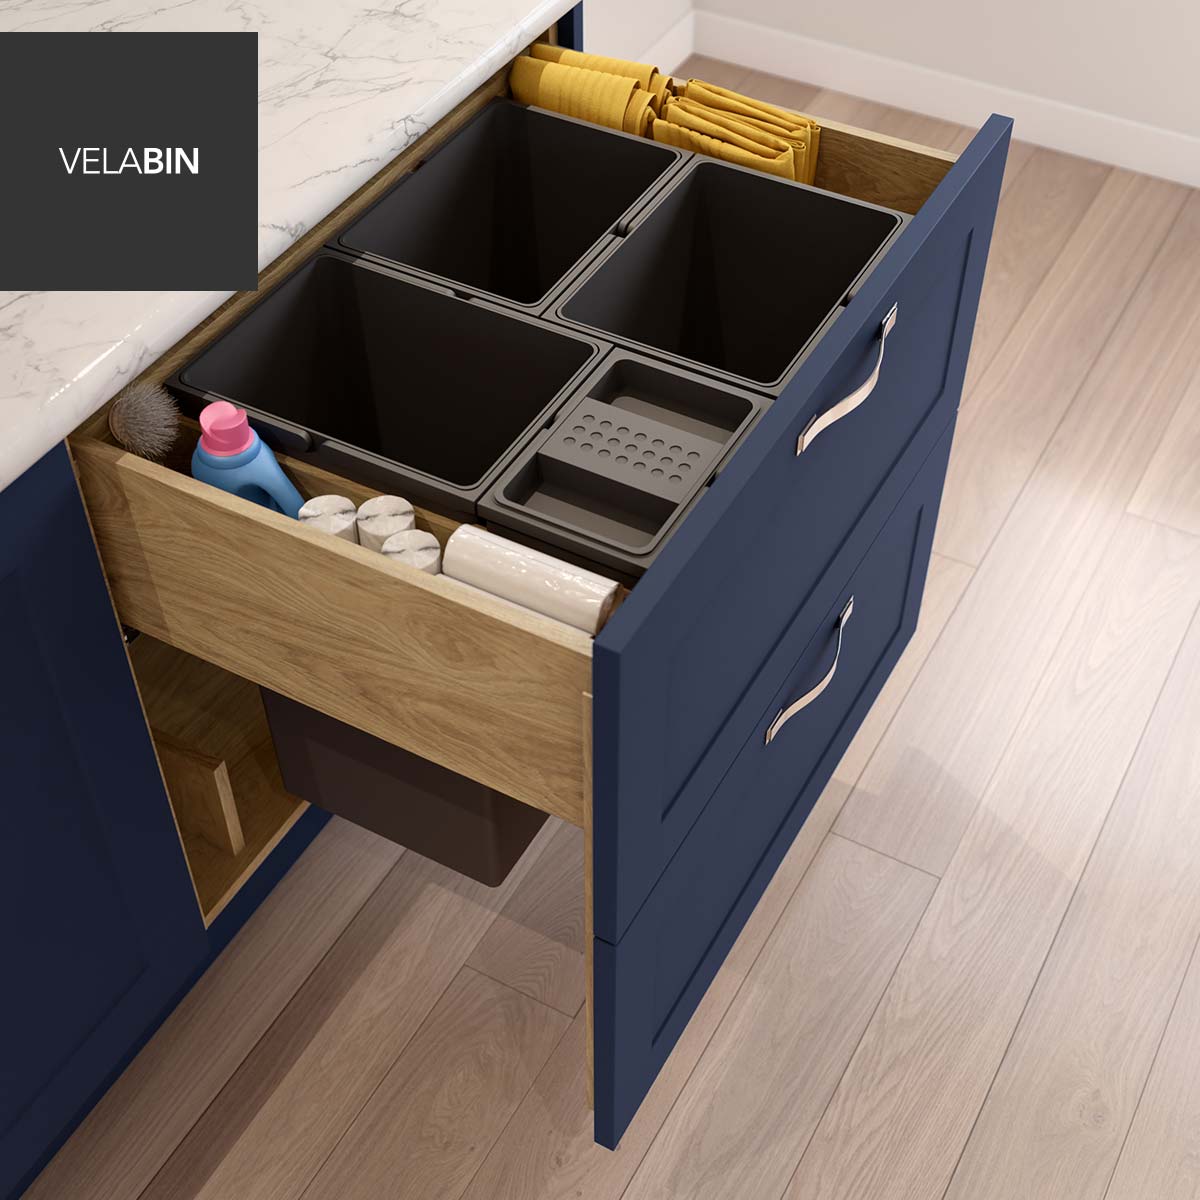 Velabin integrated kitchen bin in Anthracite Linen